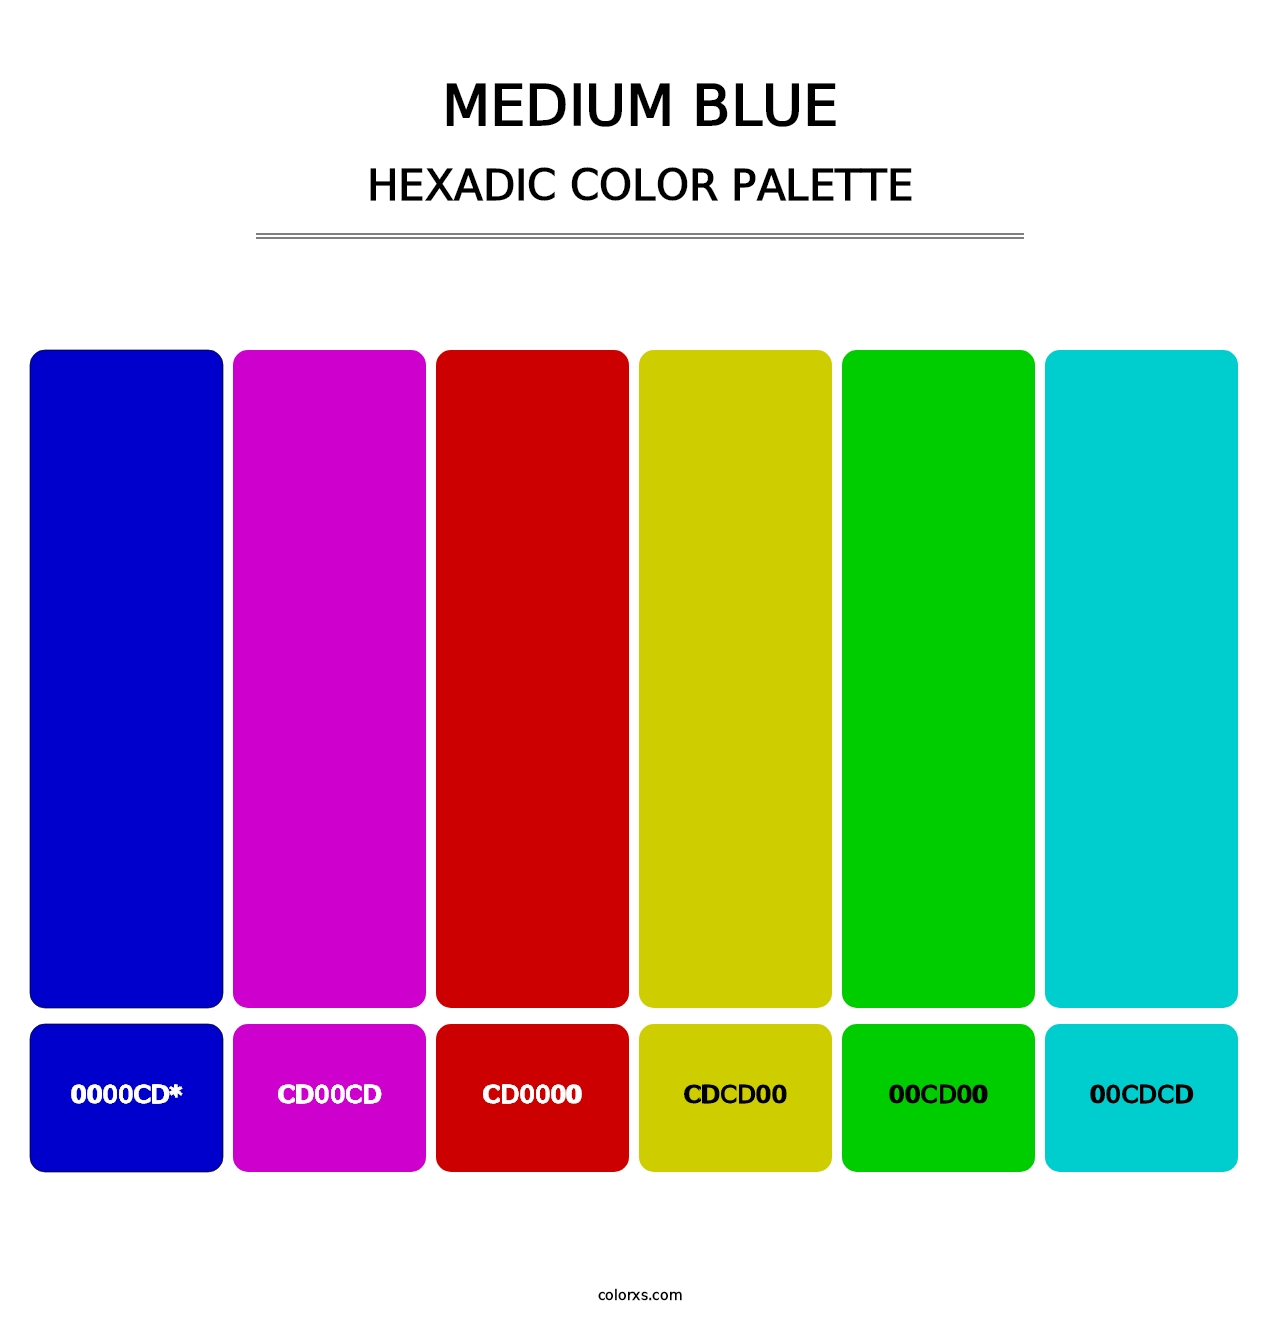 Medium Blue - Hexadic Color Palette